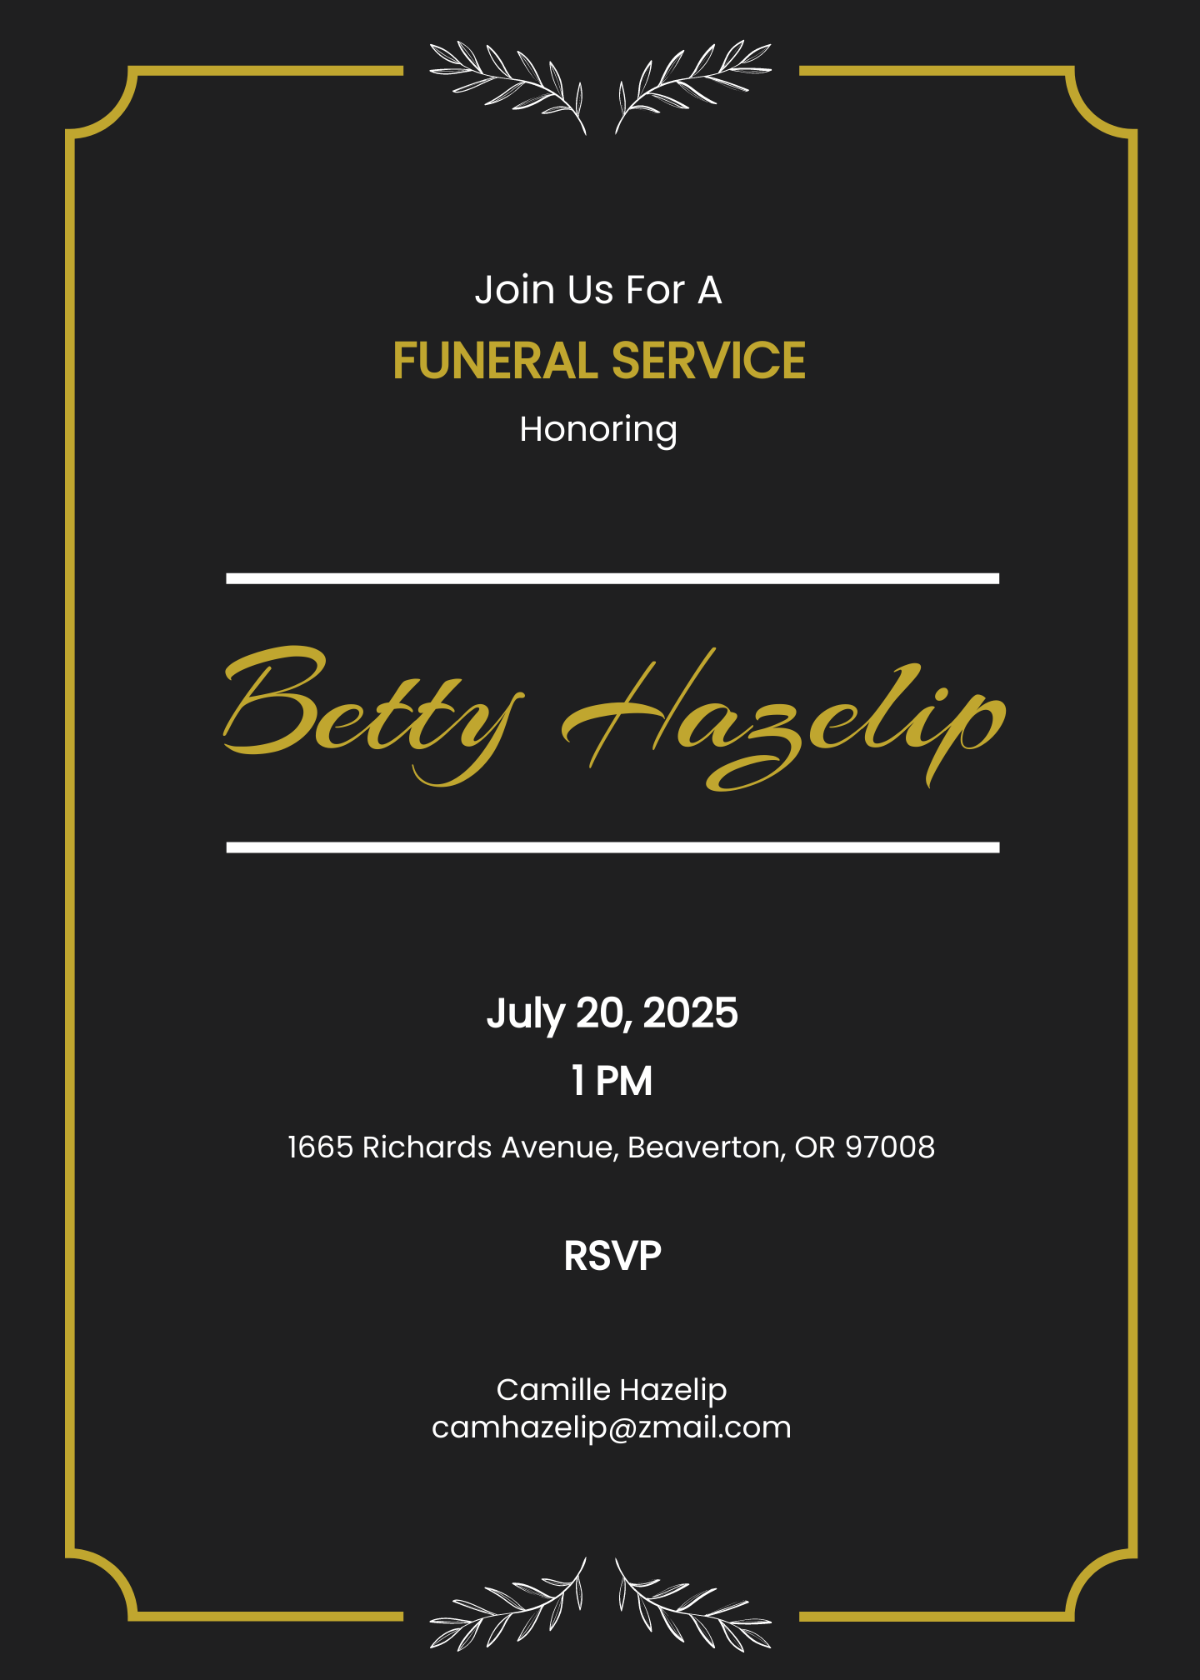 Email Funeral Memorial Invitation Template